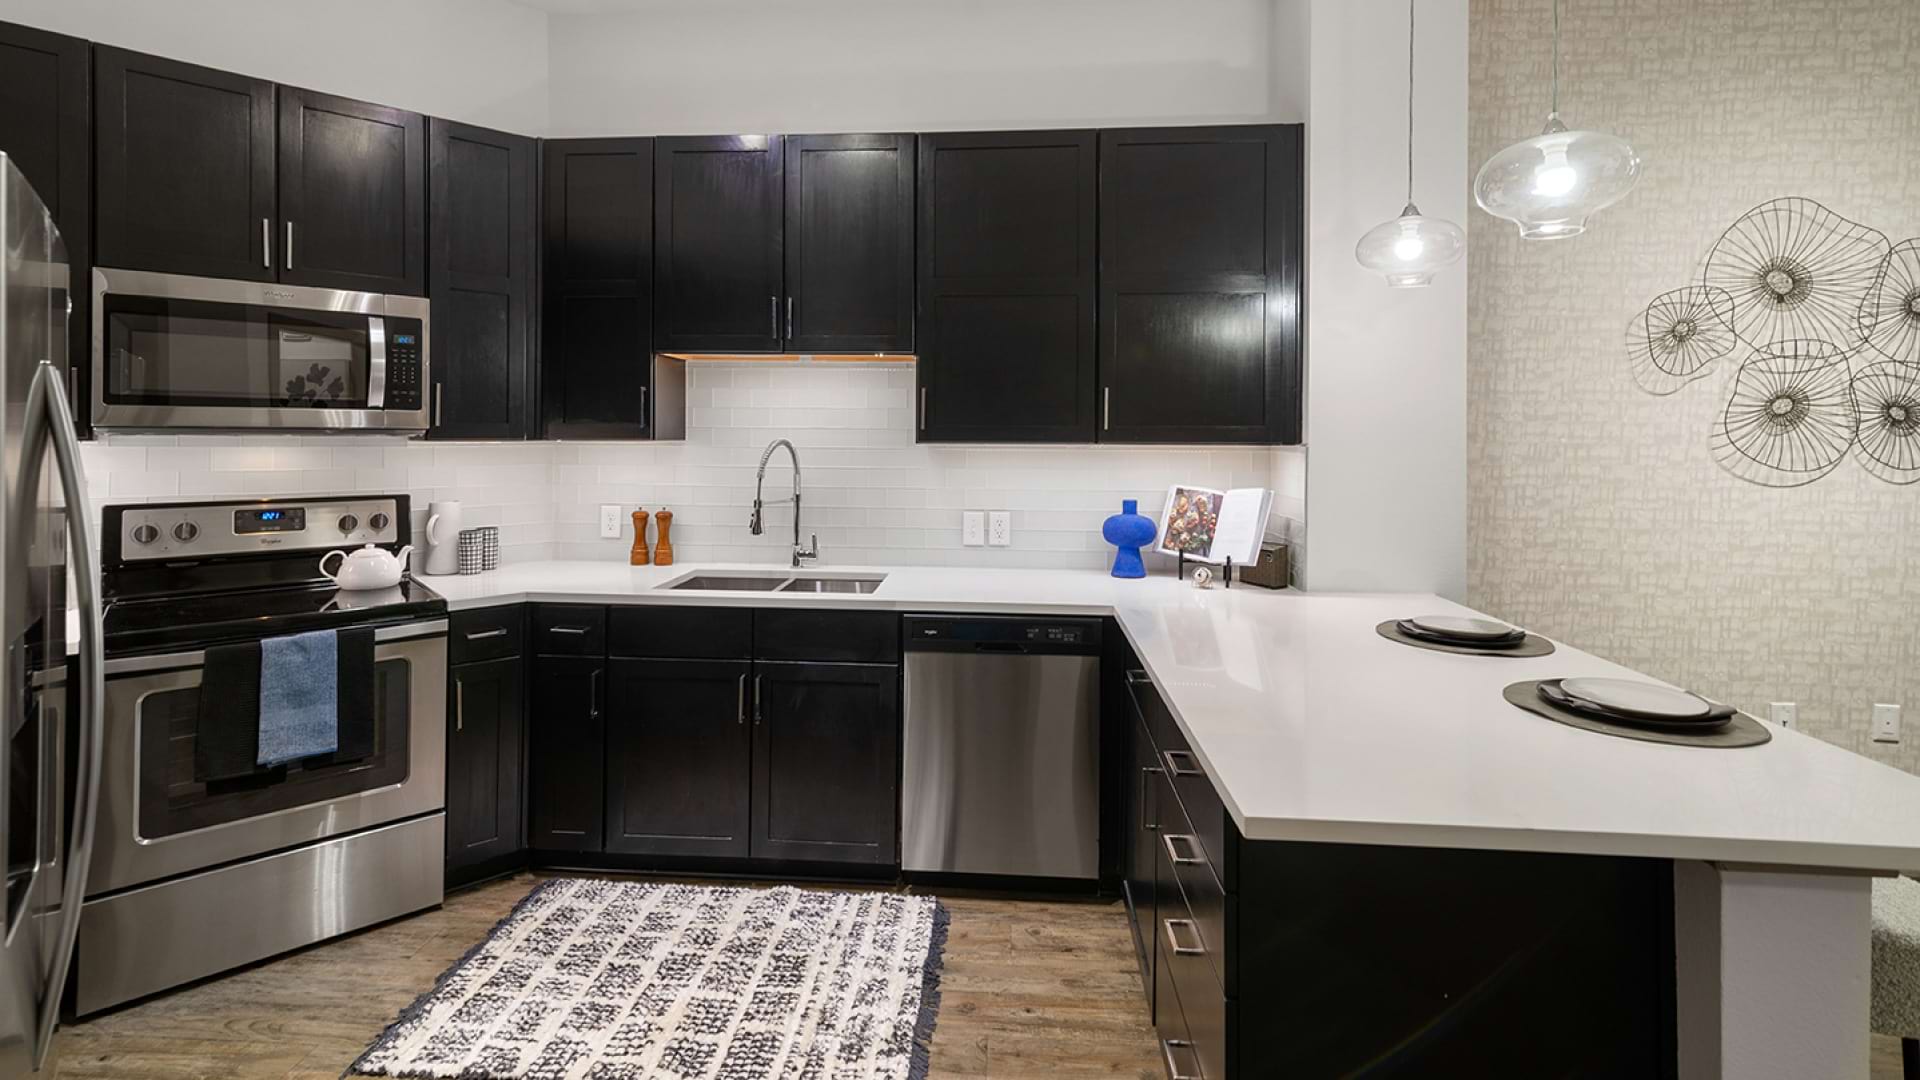 Apartments near Galleria Dallas with a spacious kitchen and quartz countertops